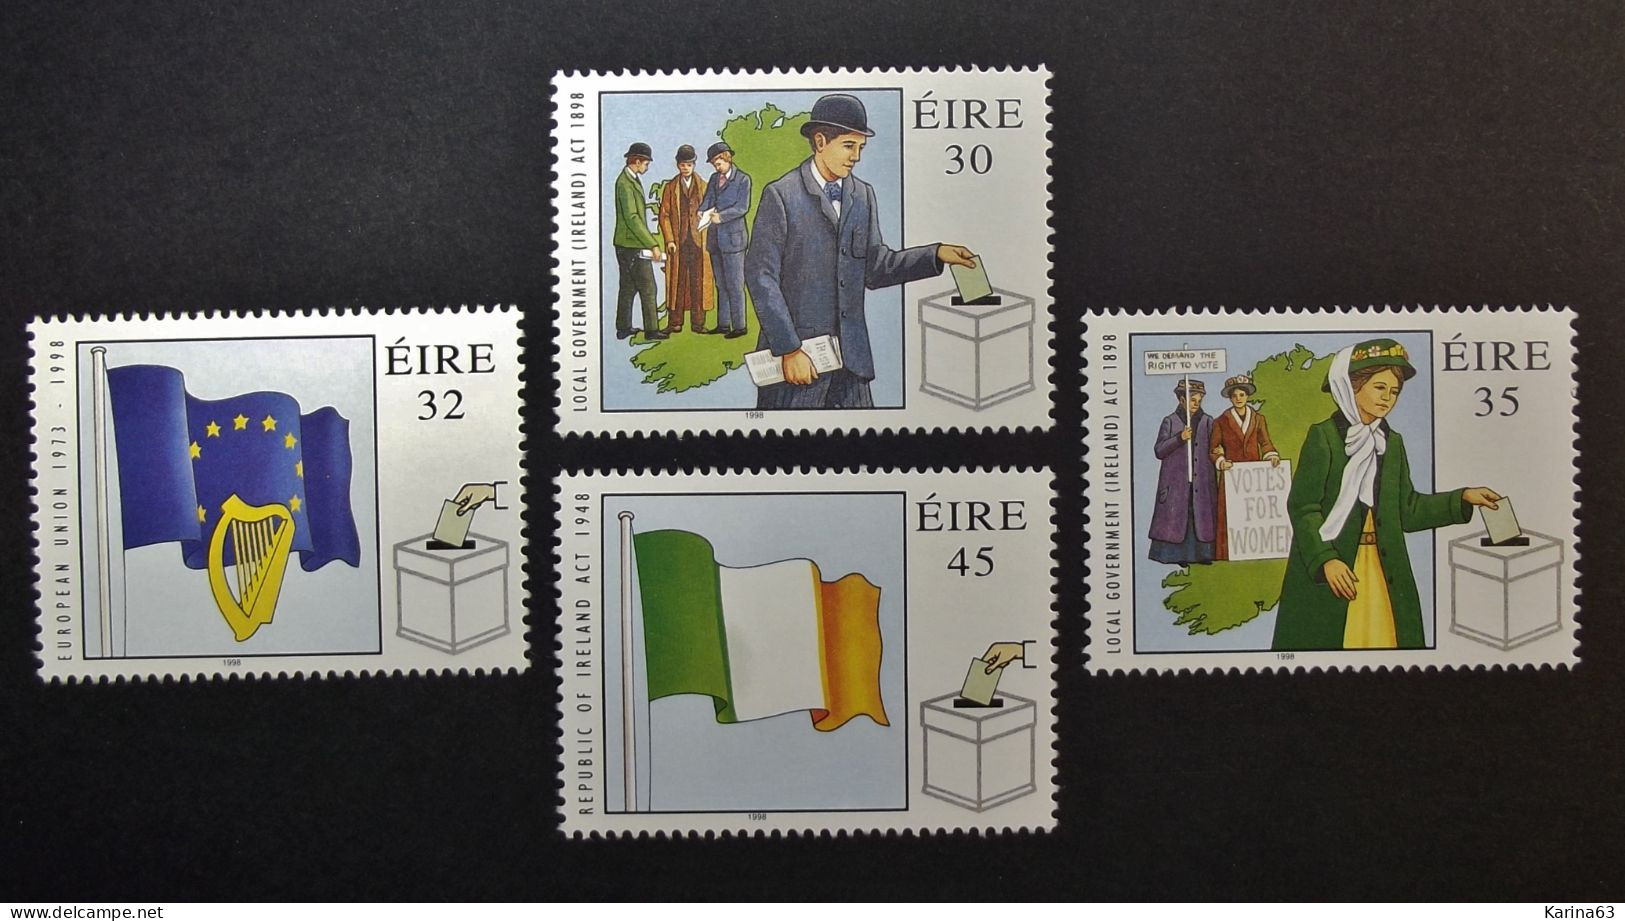 Ireland - Irelande - Eire - 1998 - Y&T N° 1081 / 1084 - (4 Val.) Irish History & Culture - MNH - Postfris - Neufs